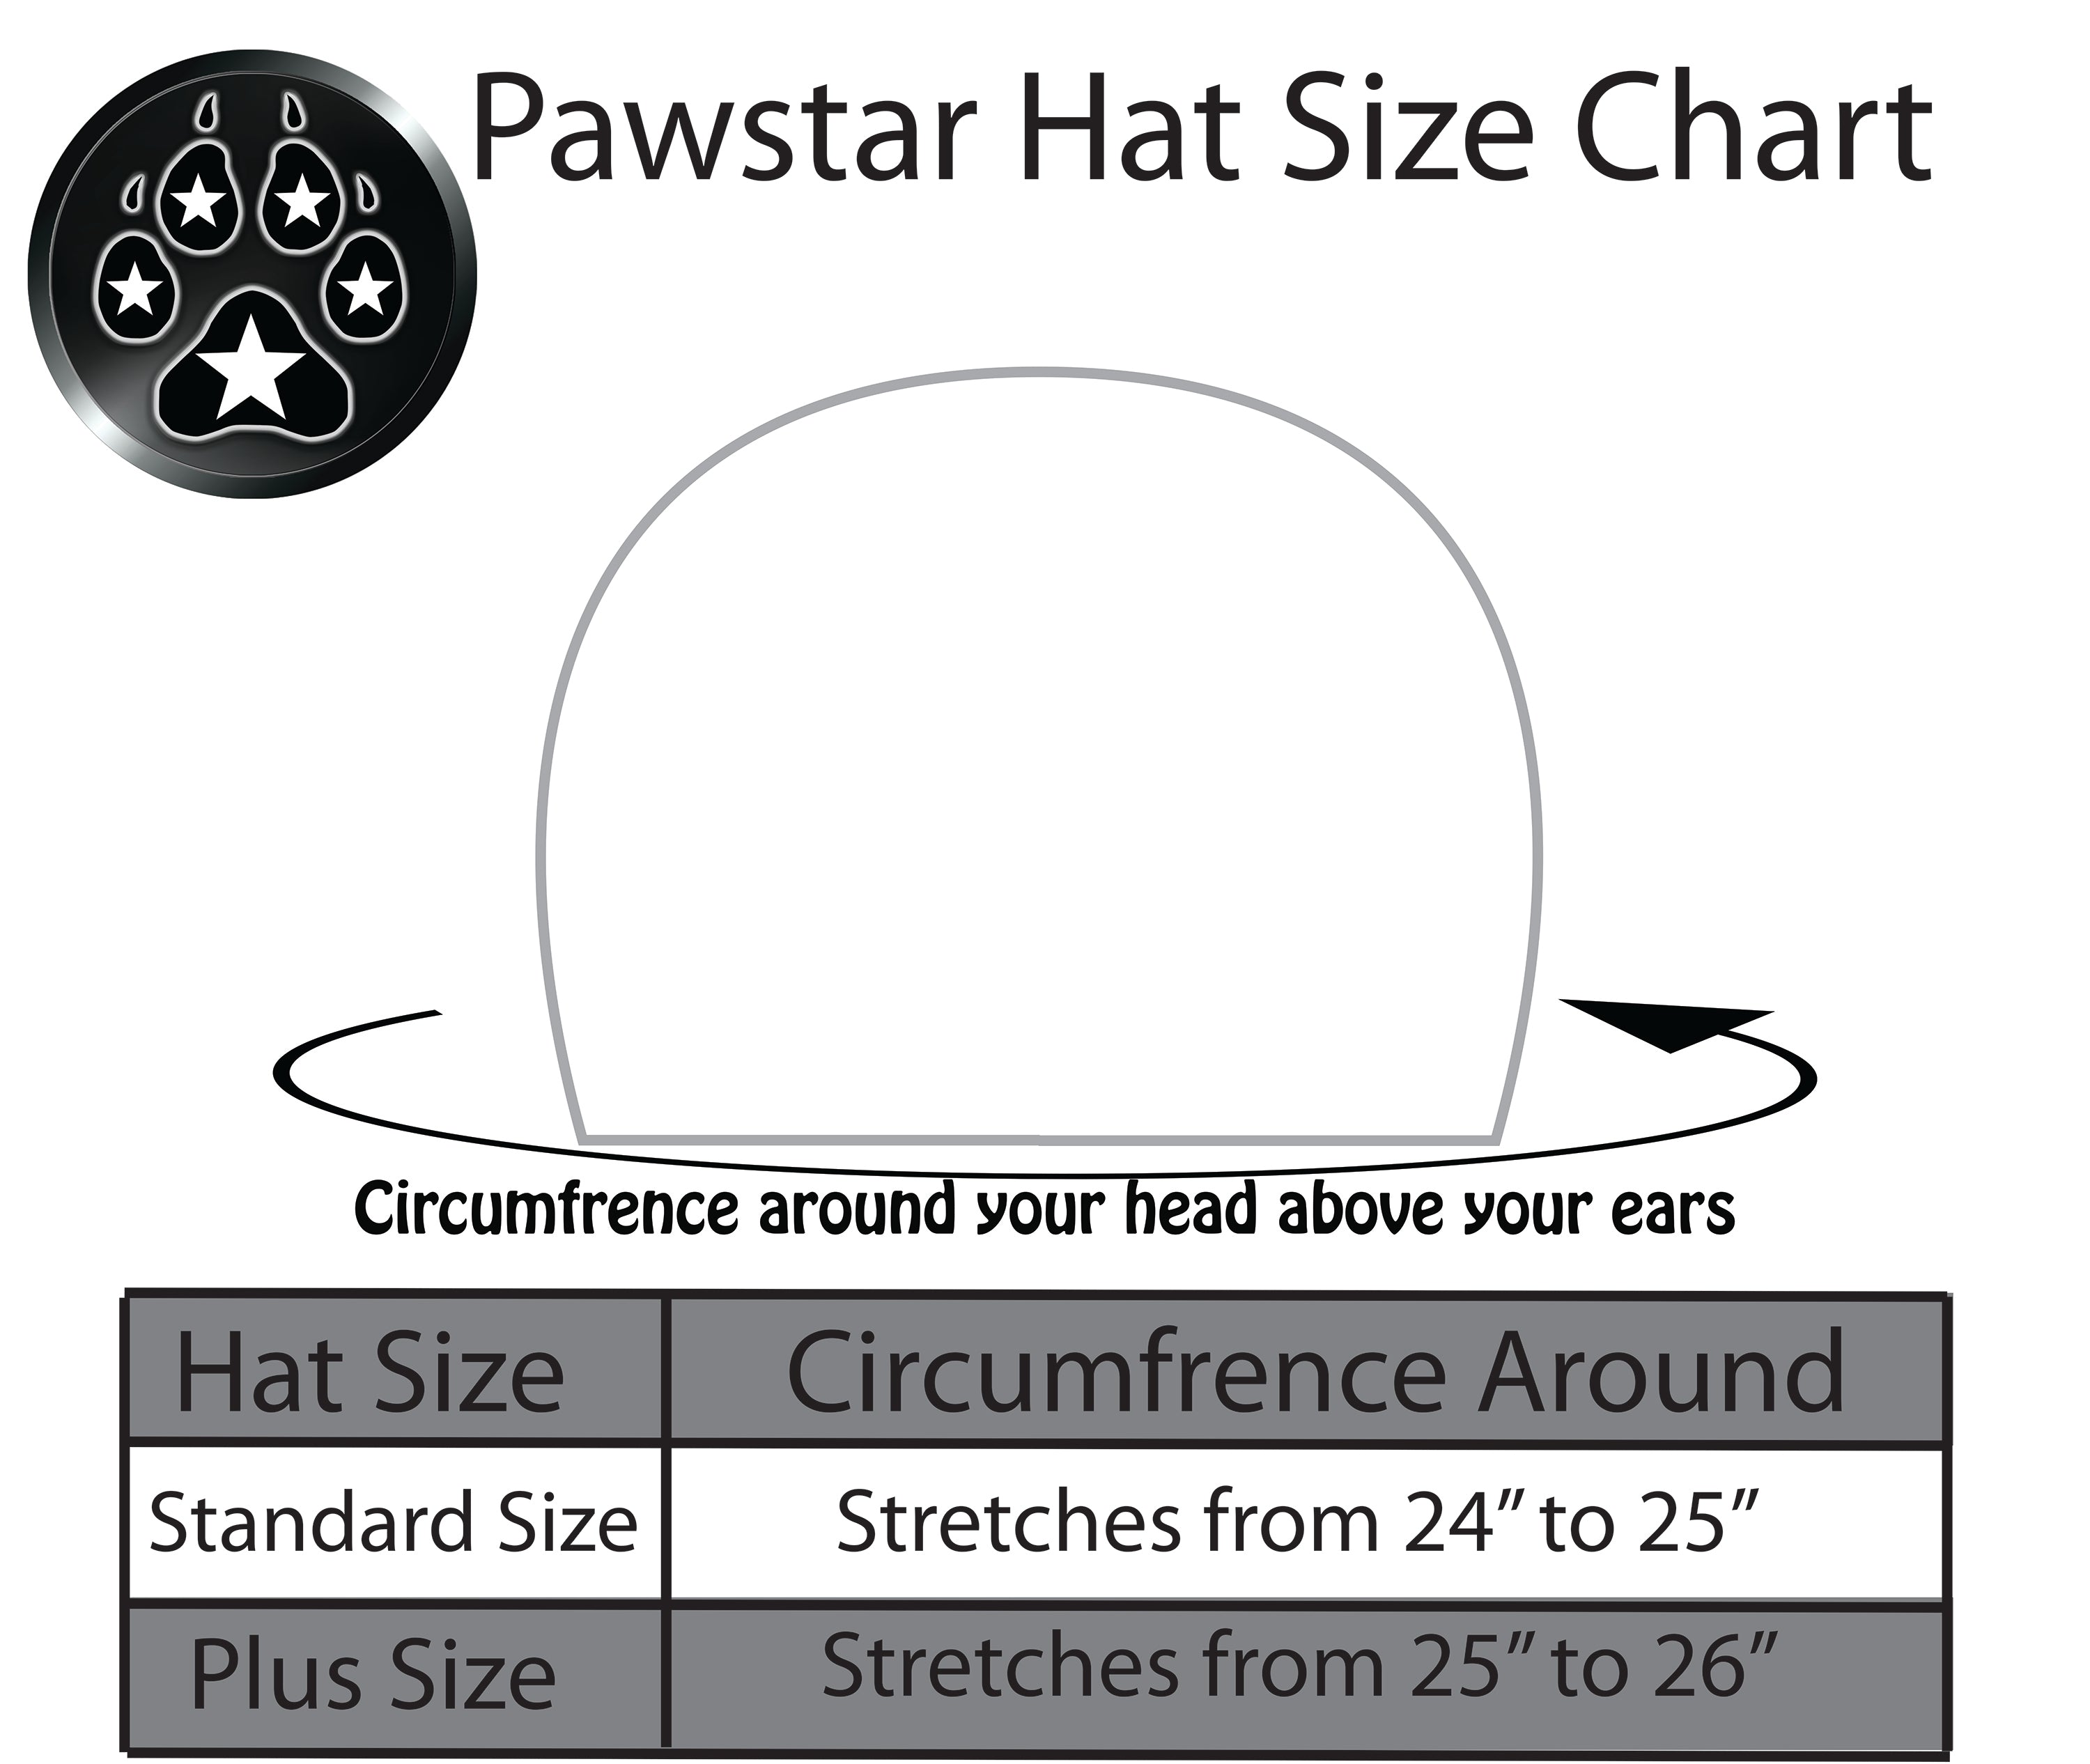 ★ Spooky Krampus Hat - Pawstar Pawstar Fleece Hats december, hat, limited, new, ship-15, ship-30day